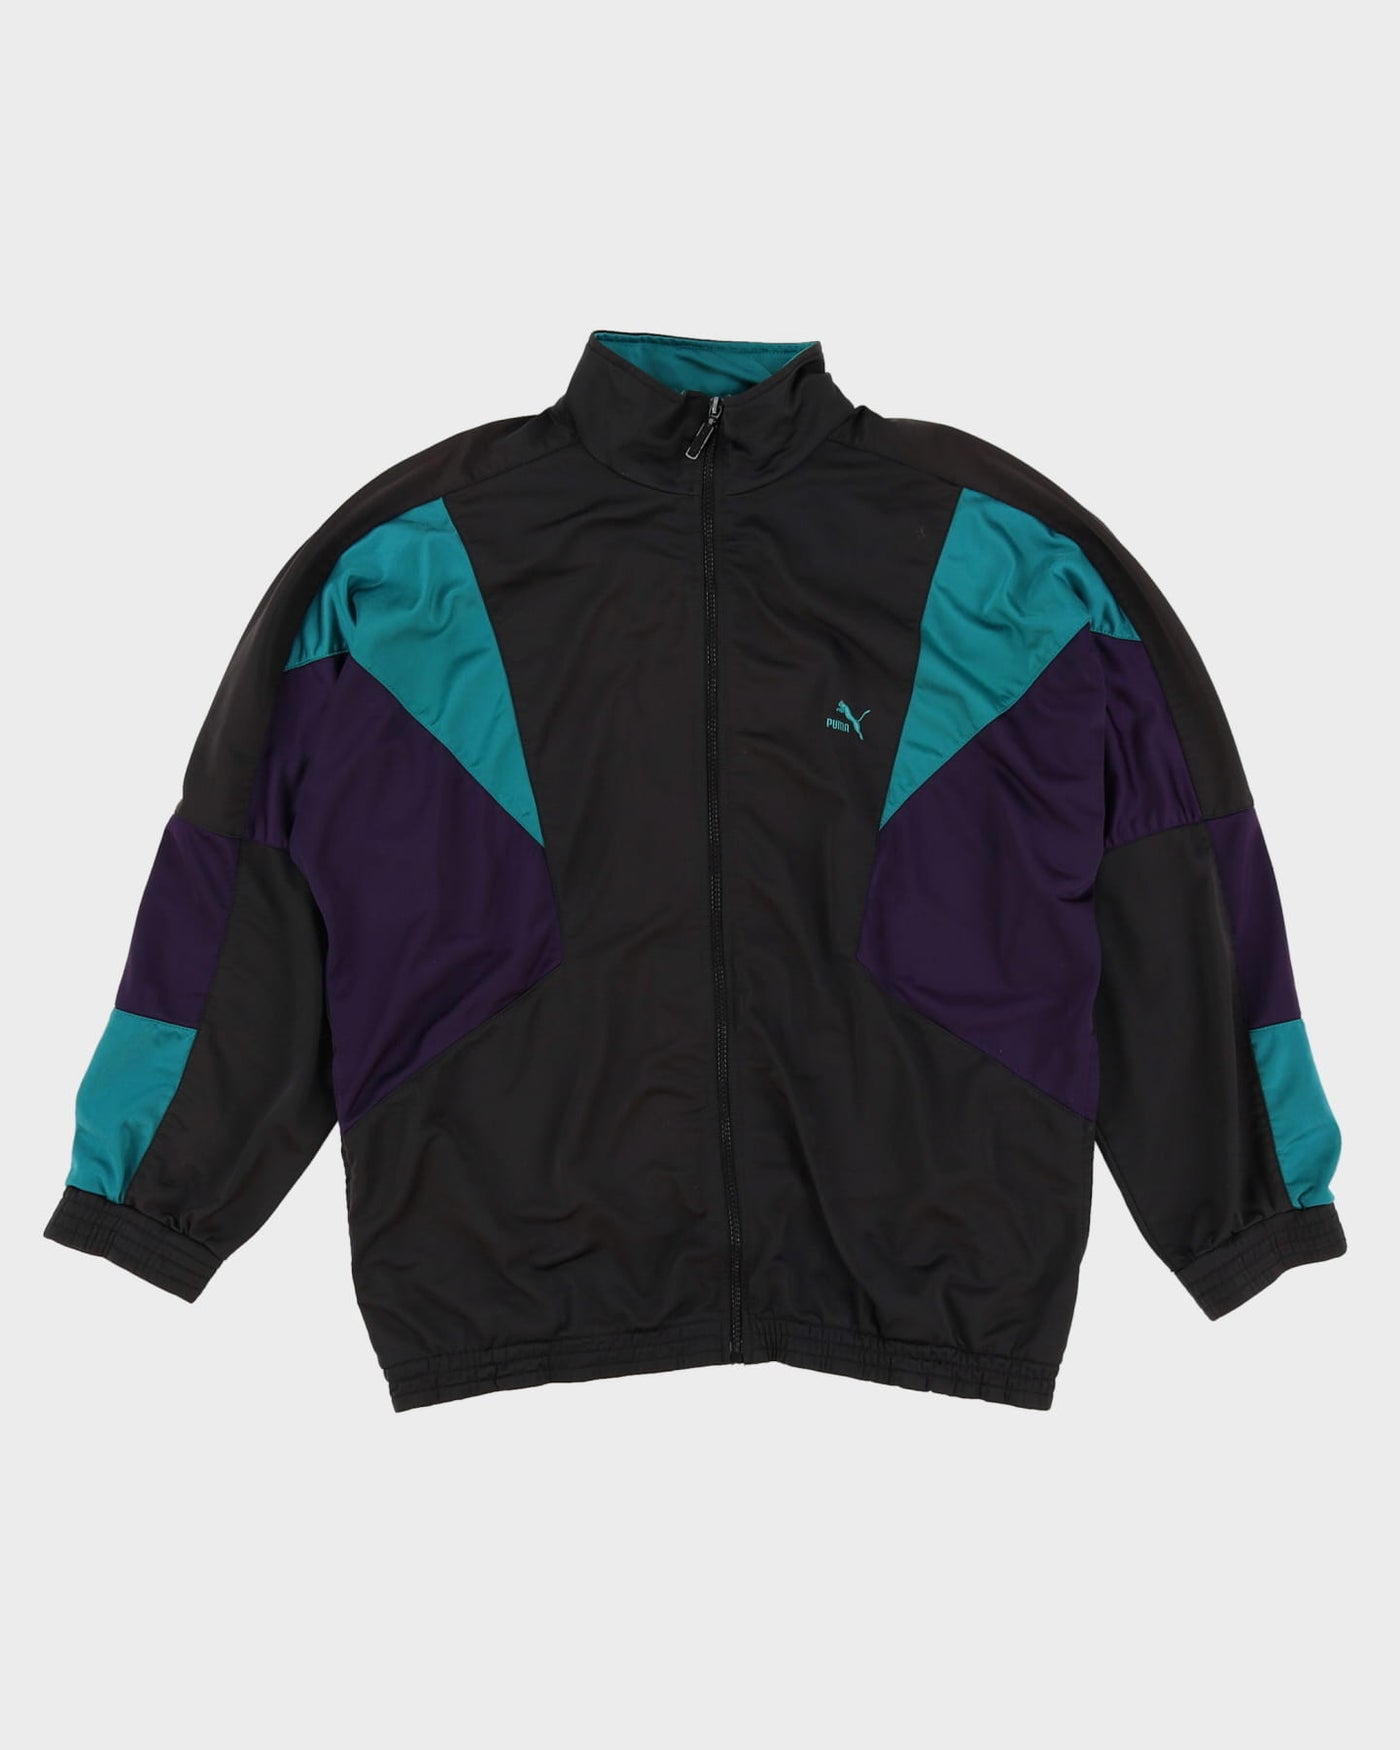 Pre-Loved 90s Puma Black / Purple / Green Track Jacket - M